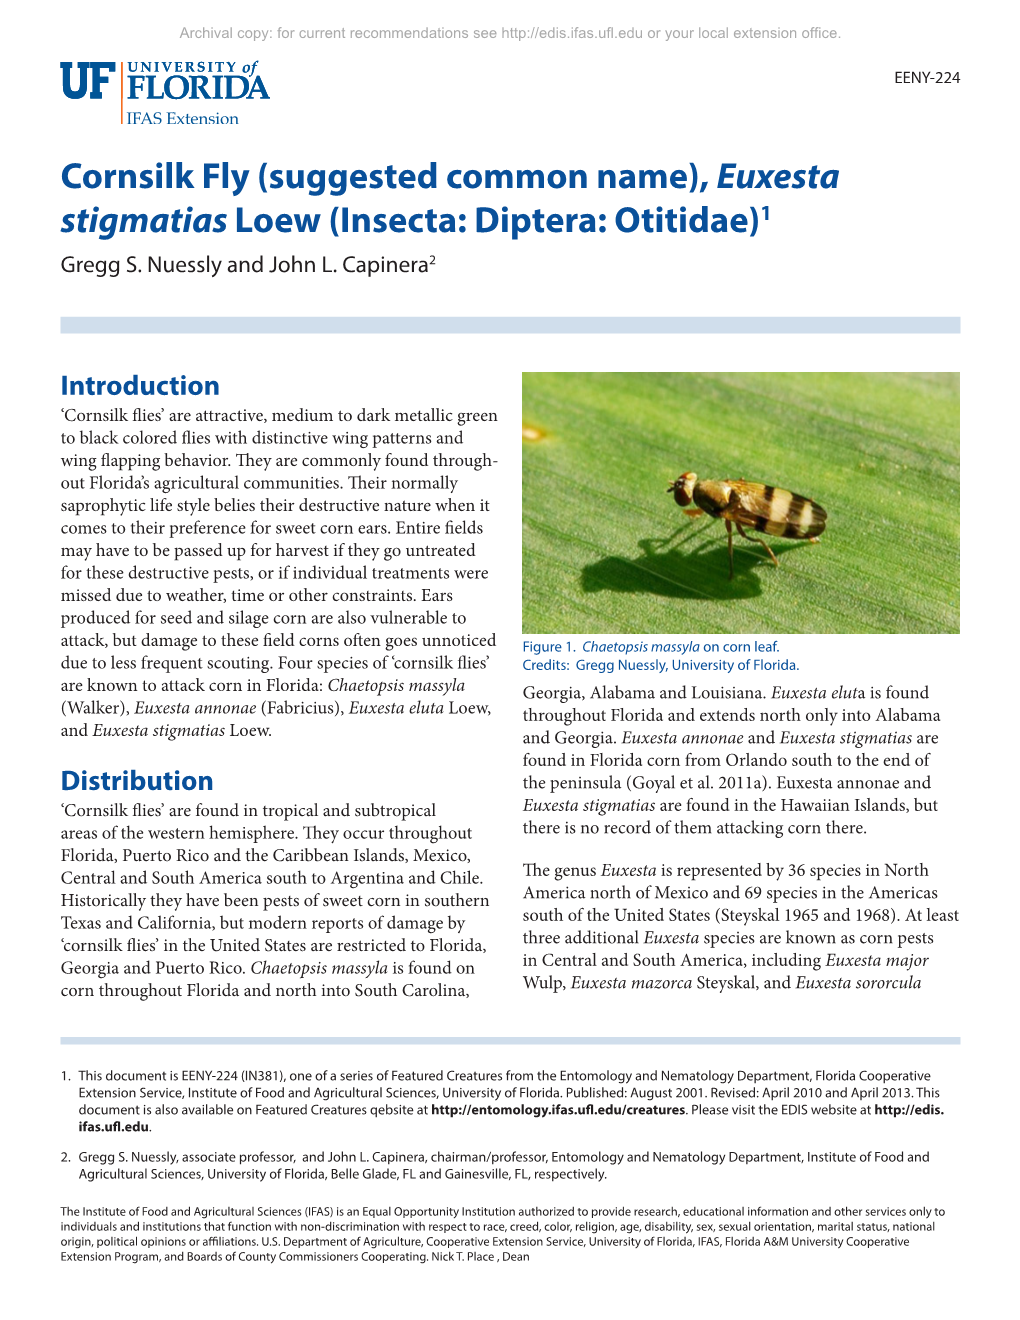 Euxesta Stigmatias Loew (Insecta: Diptera: Otitidae)1 Gregg S